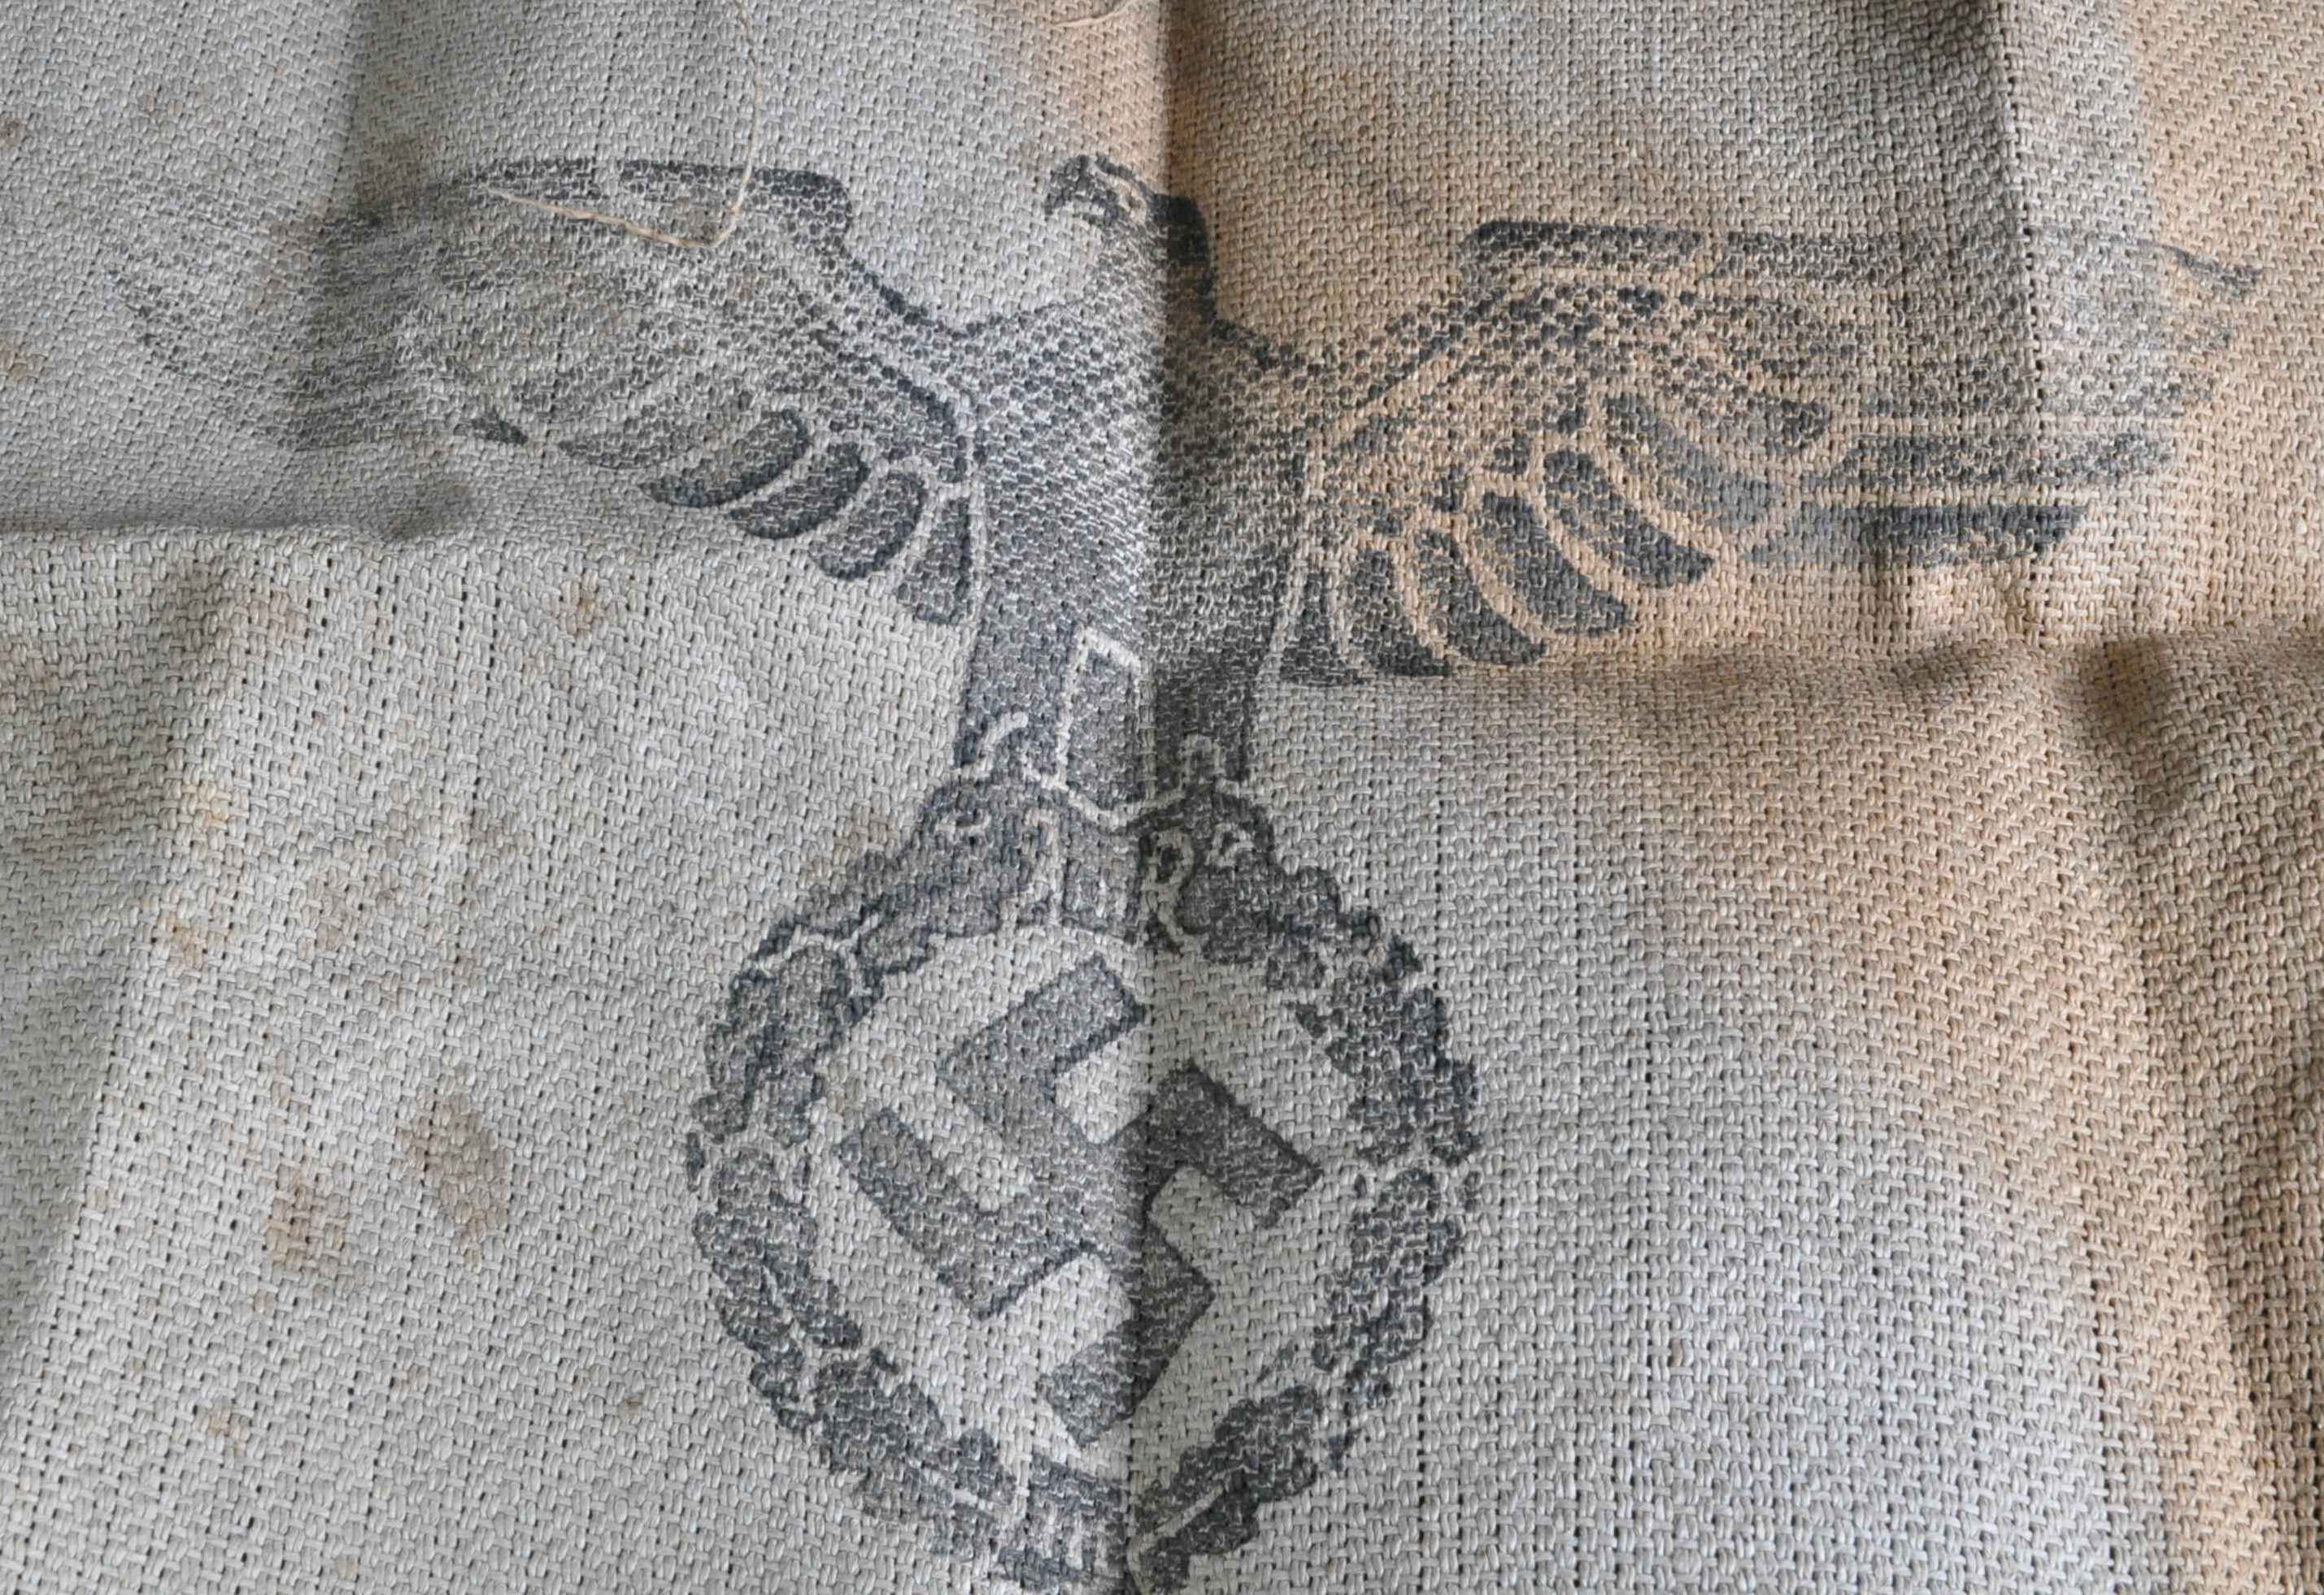 ORIGINAL WWII SECOND WORLD WAR GERMAN NAZI GRAIN SACK EMBLEM - Image 2 of 4